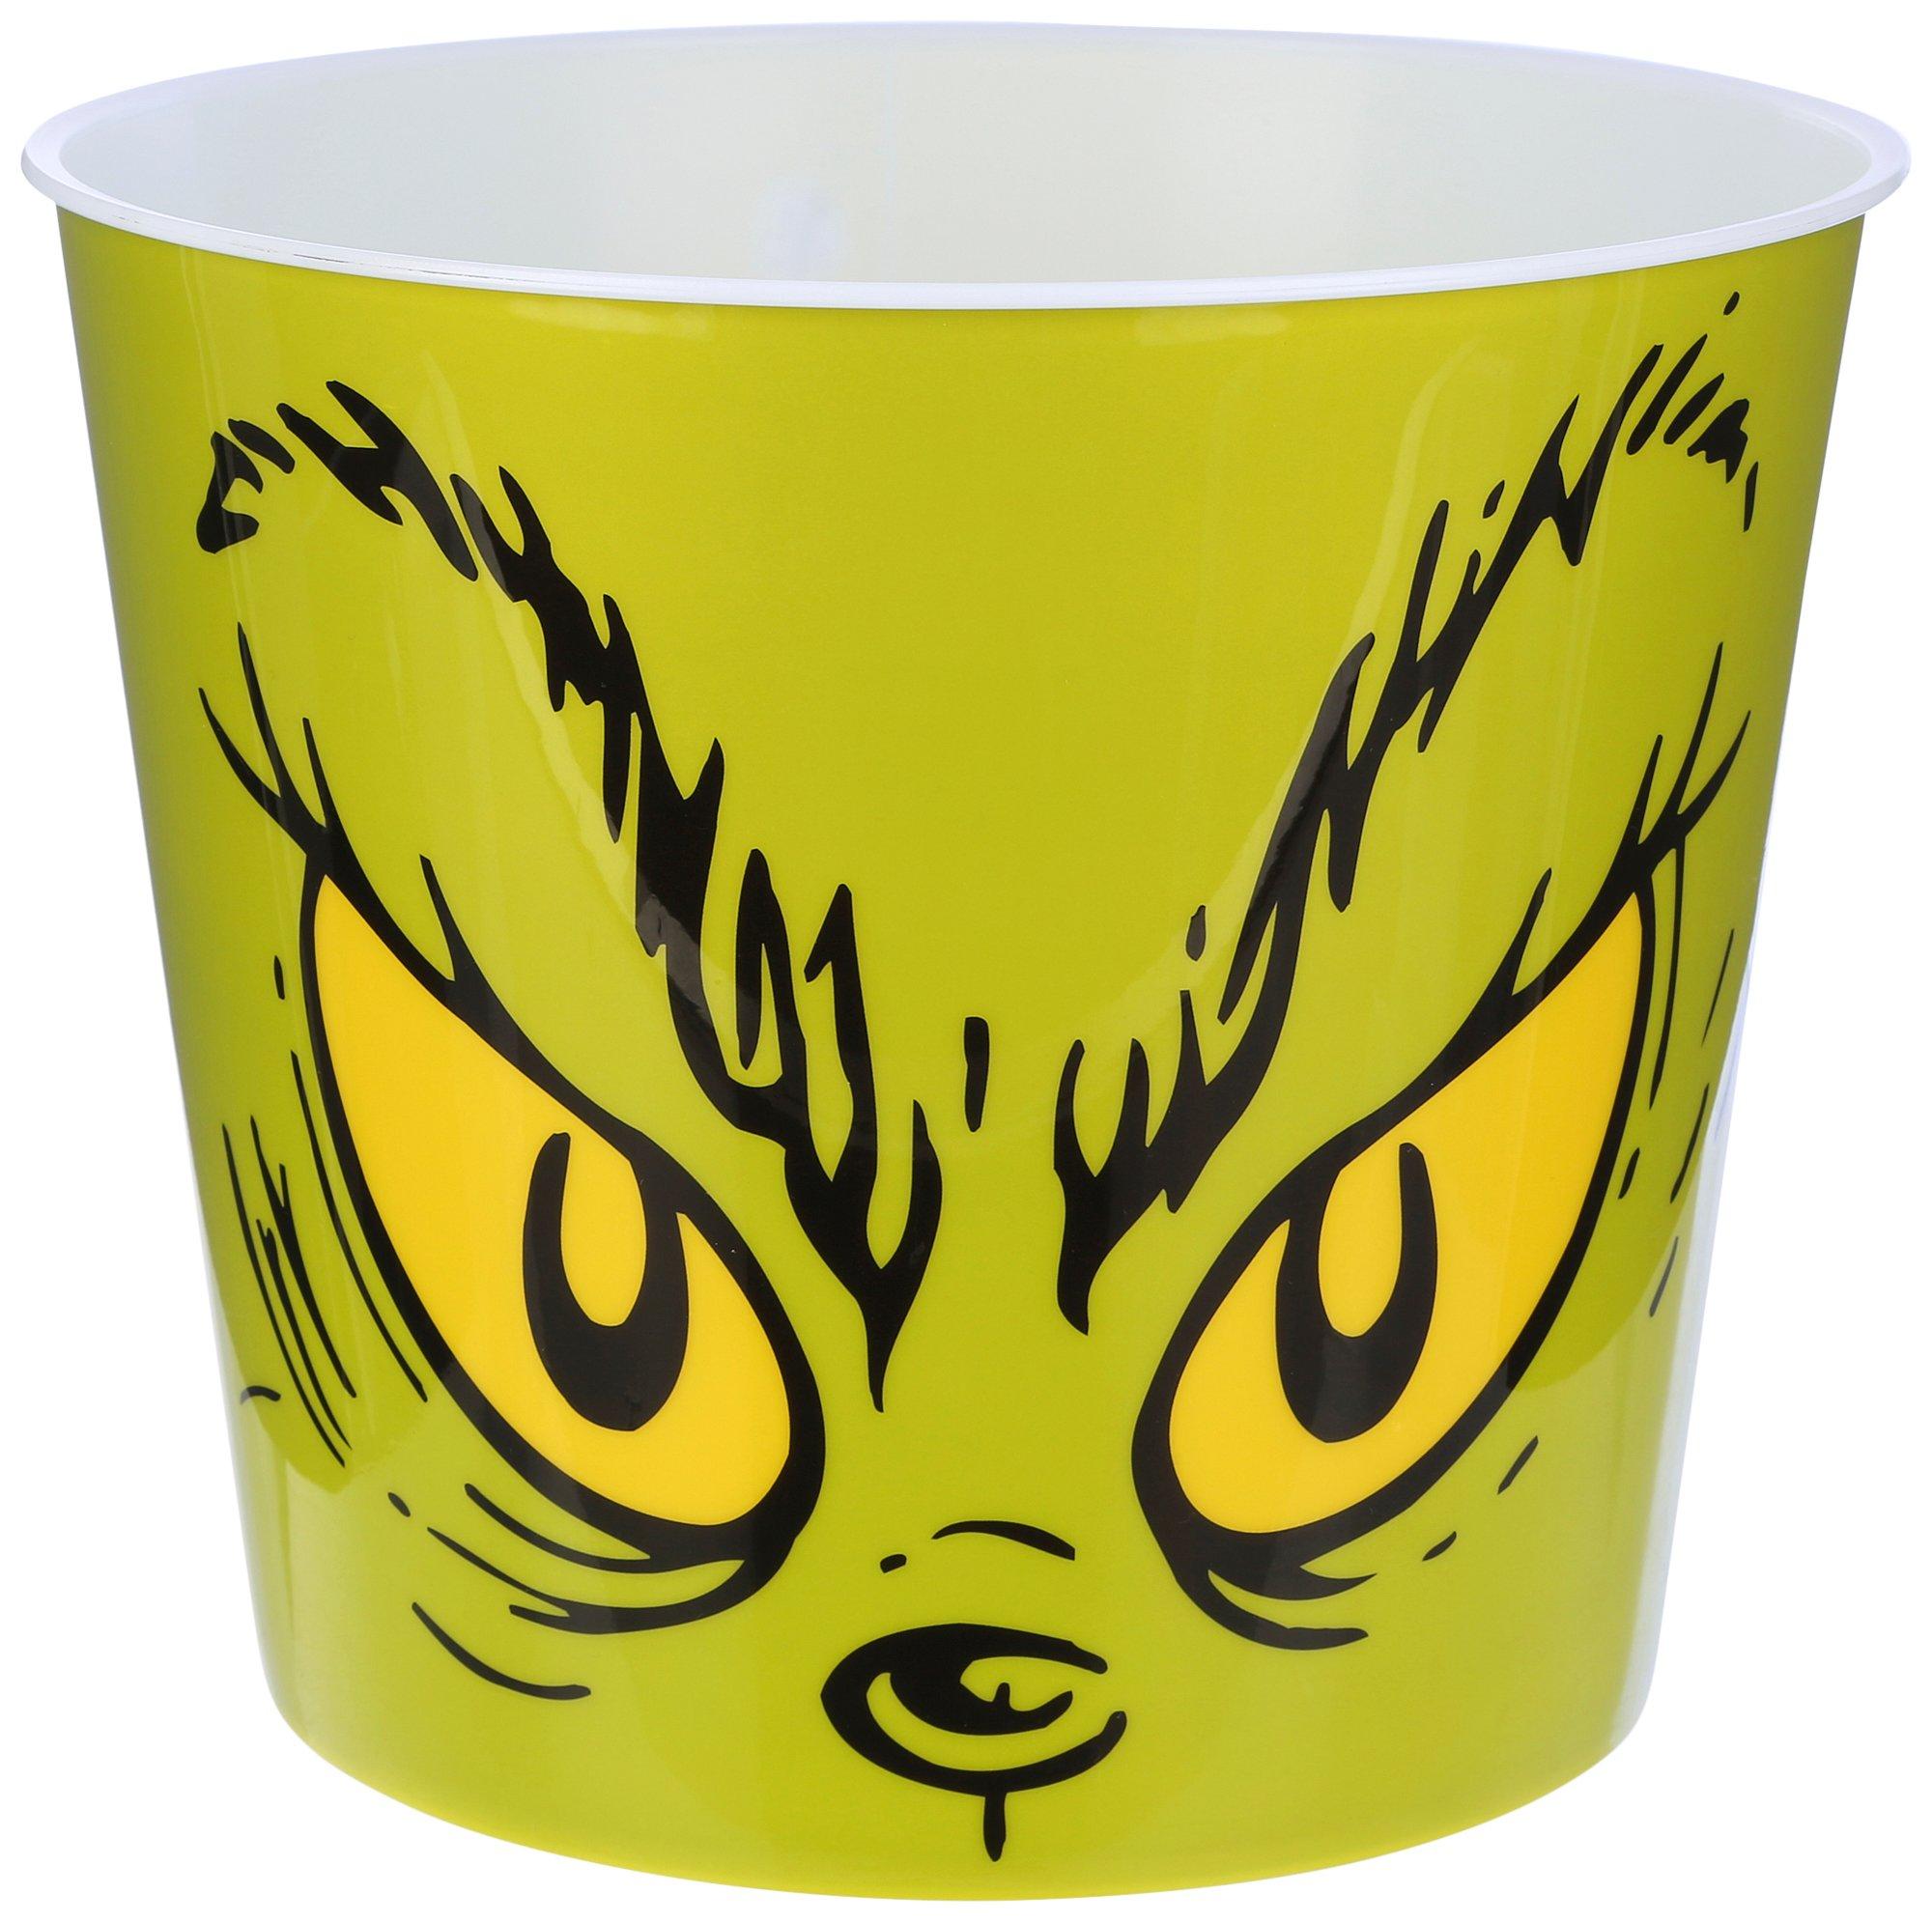 Grinch Big Face 16 oz. Acrylic Cup with Straw